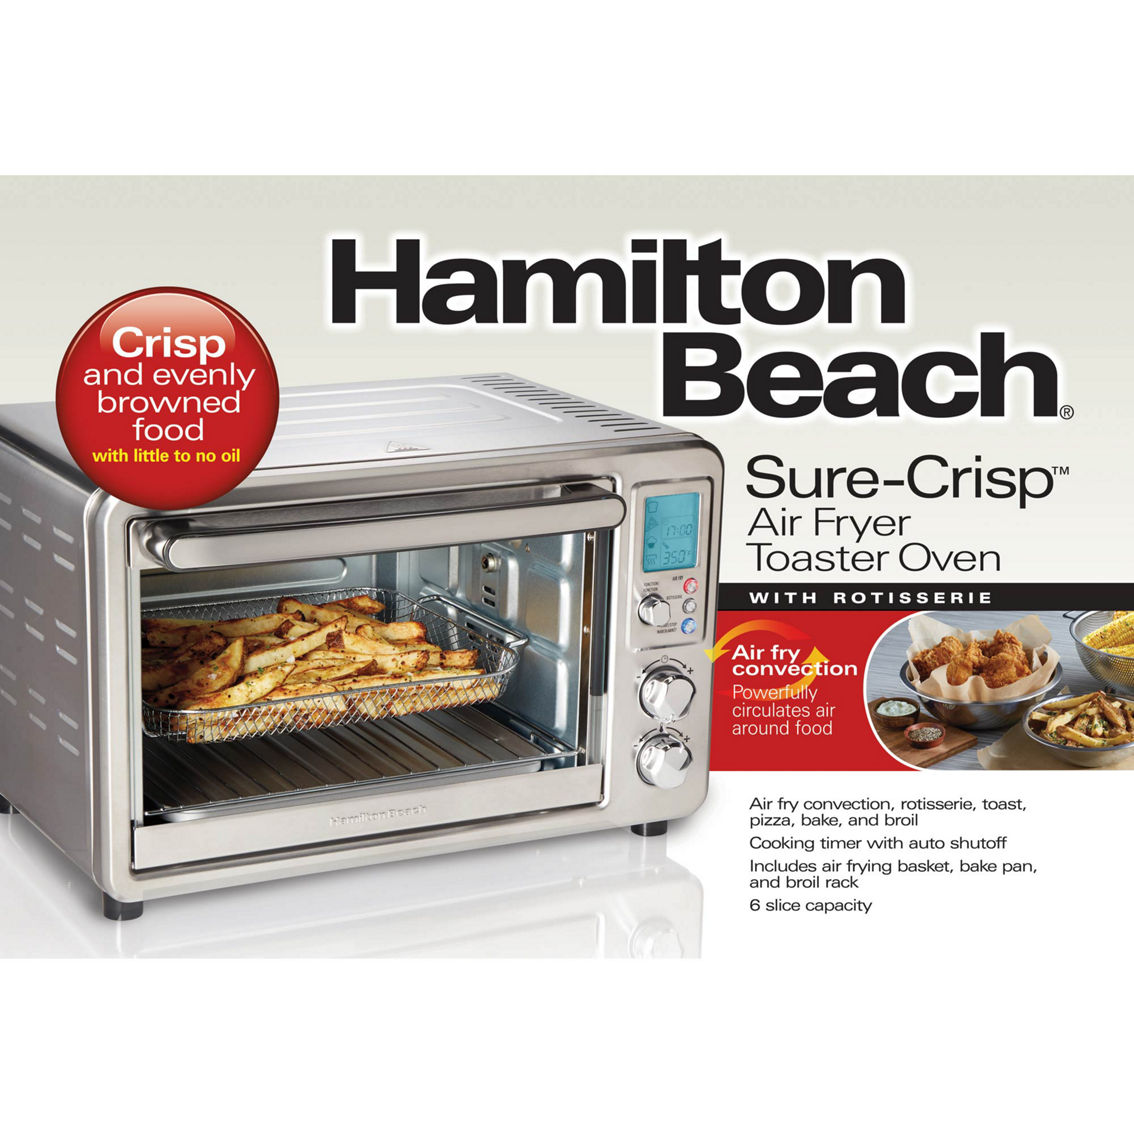 Hamilton Beach Sure-Crisp Digital Air Fryer Toaster Oven with Rotisserie - Image 2 of 6